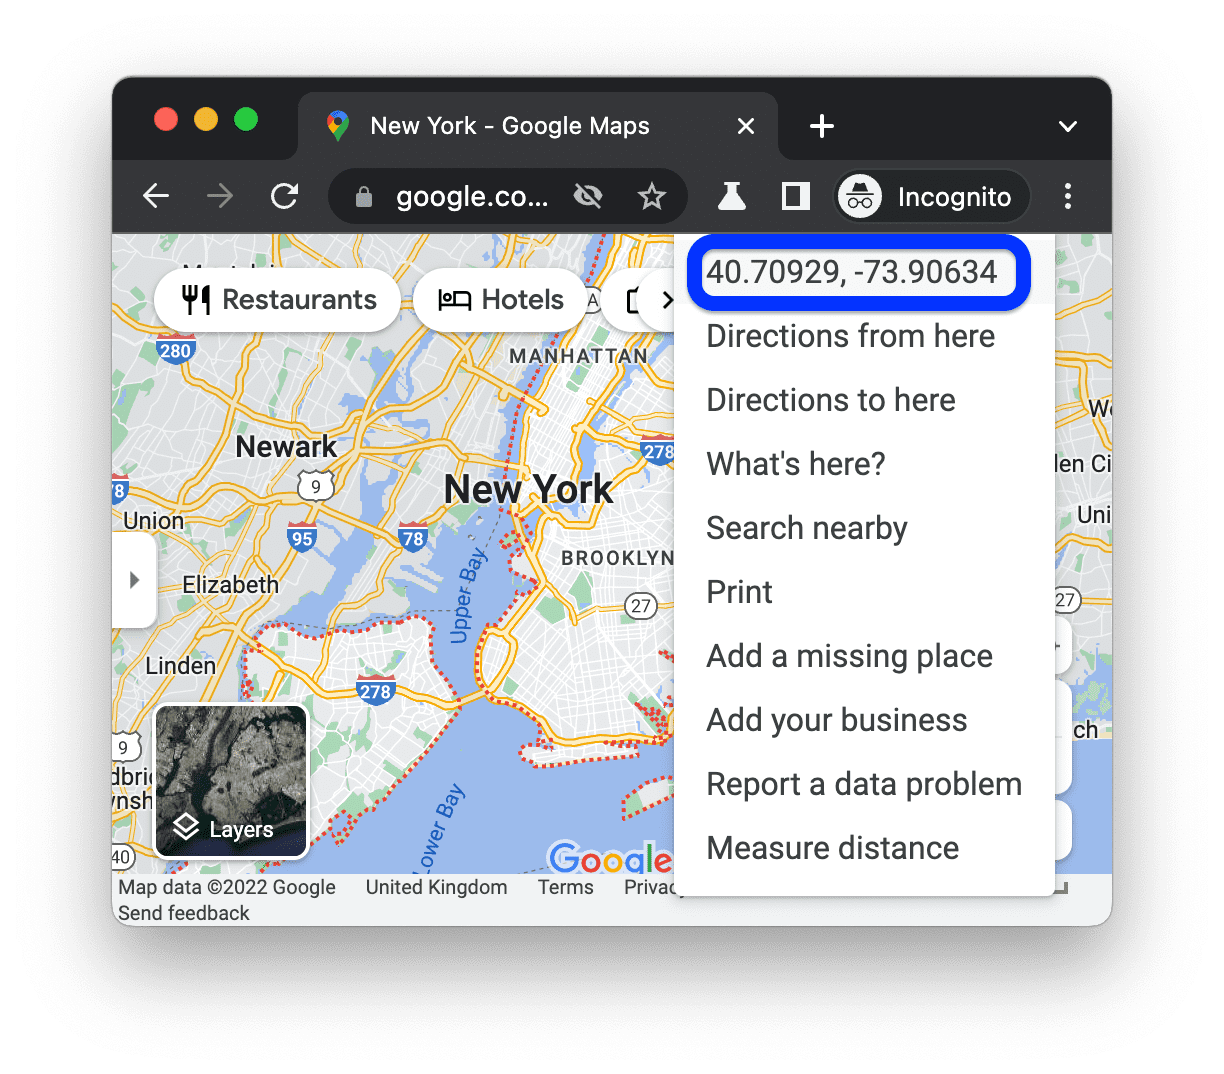 Coordenadas de Nova York no Google Maps.